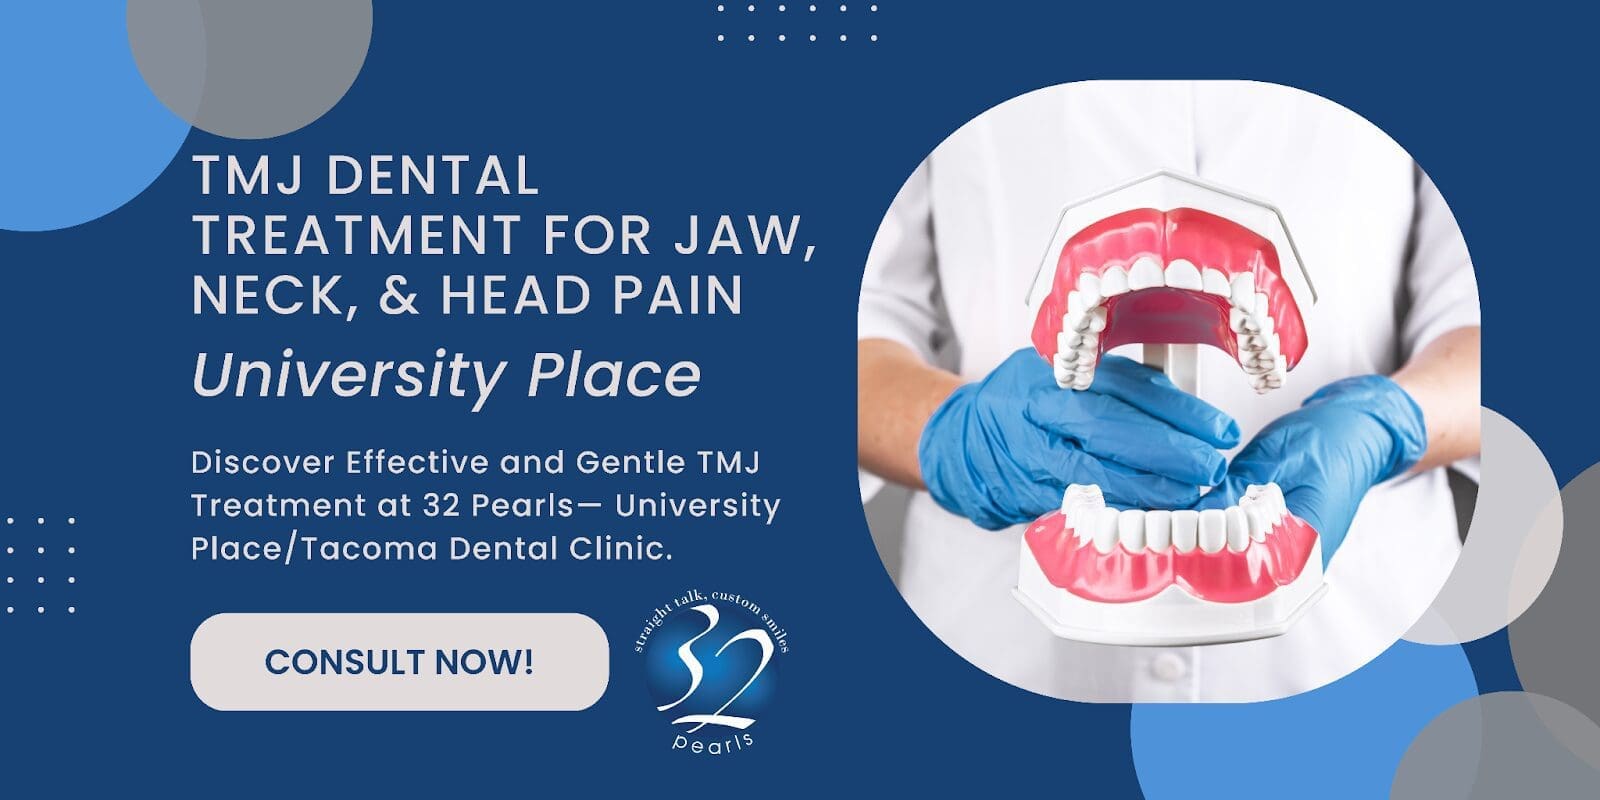 University Place - TMJ Dental Treatment for Jaw, Neck, & Head Pain